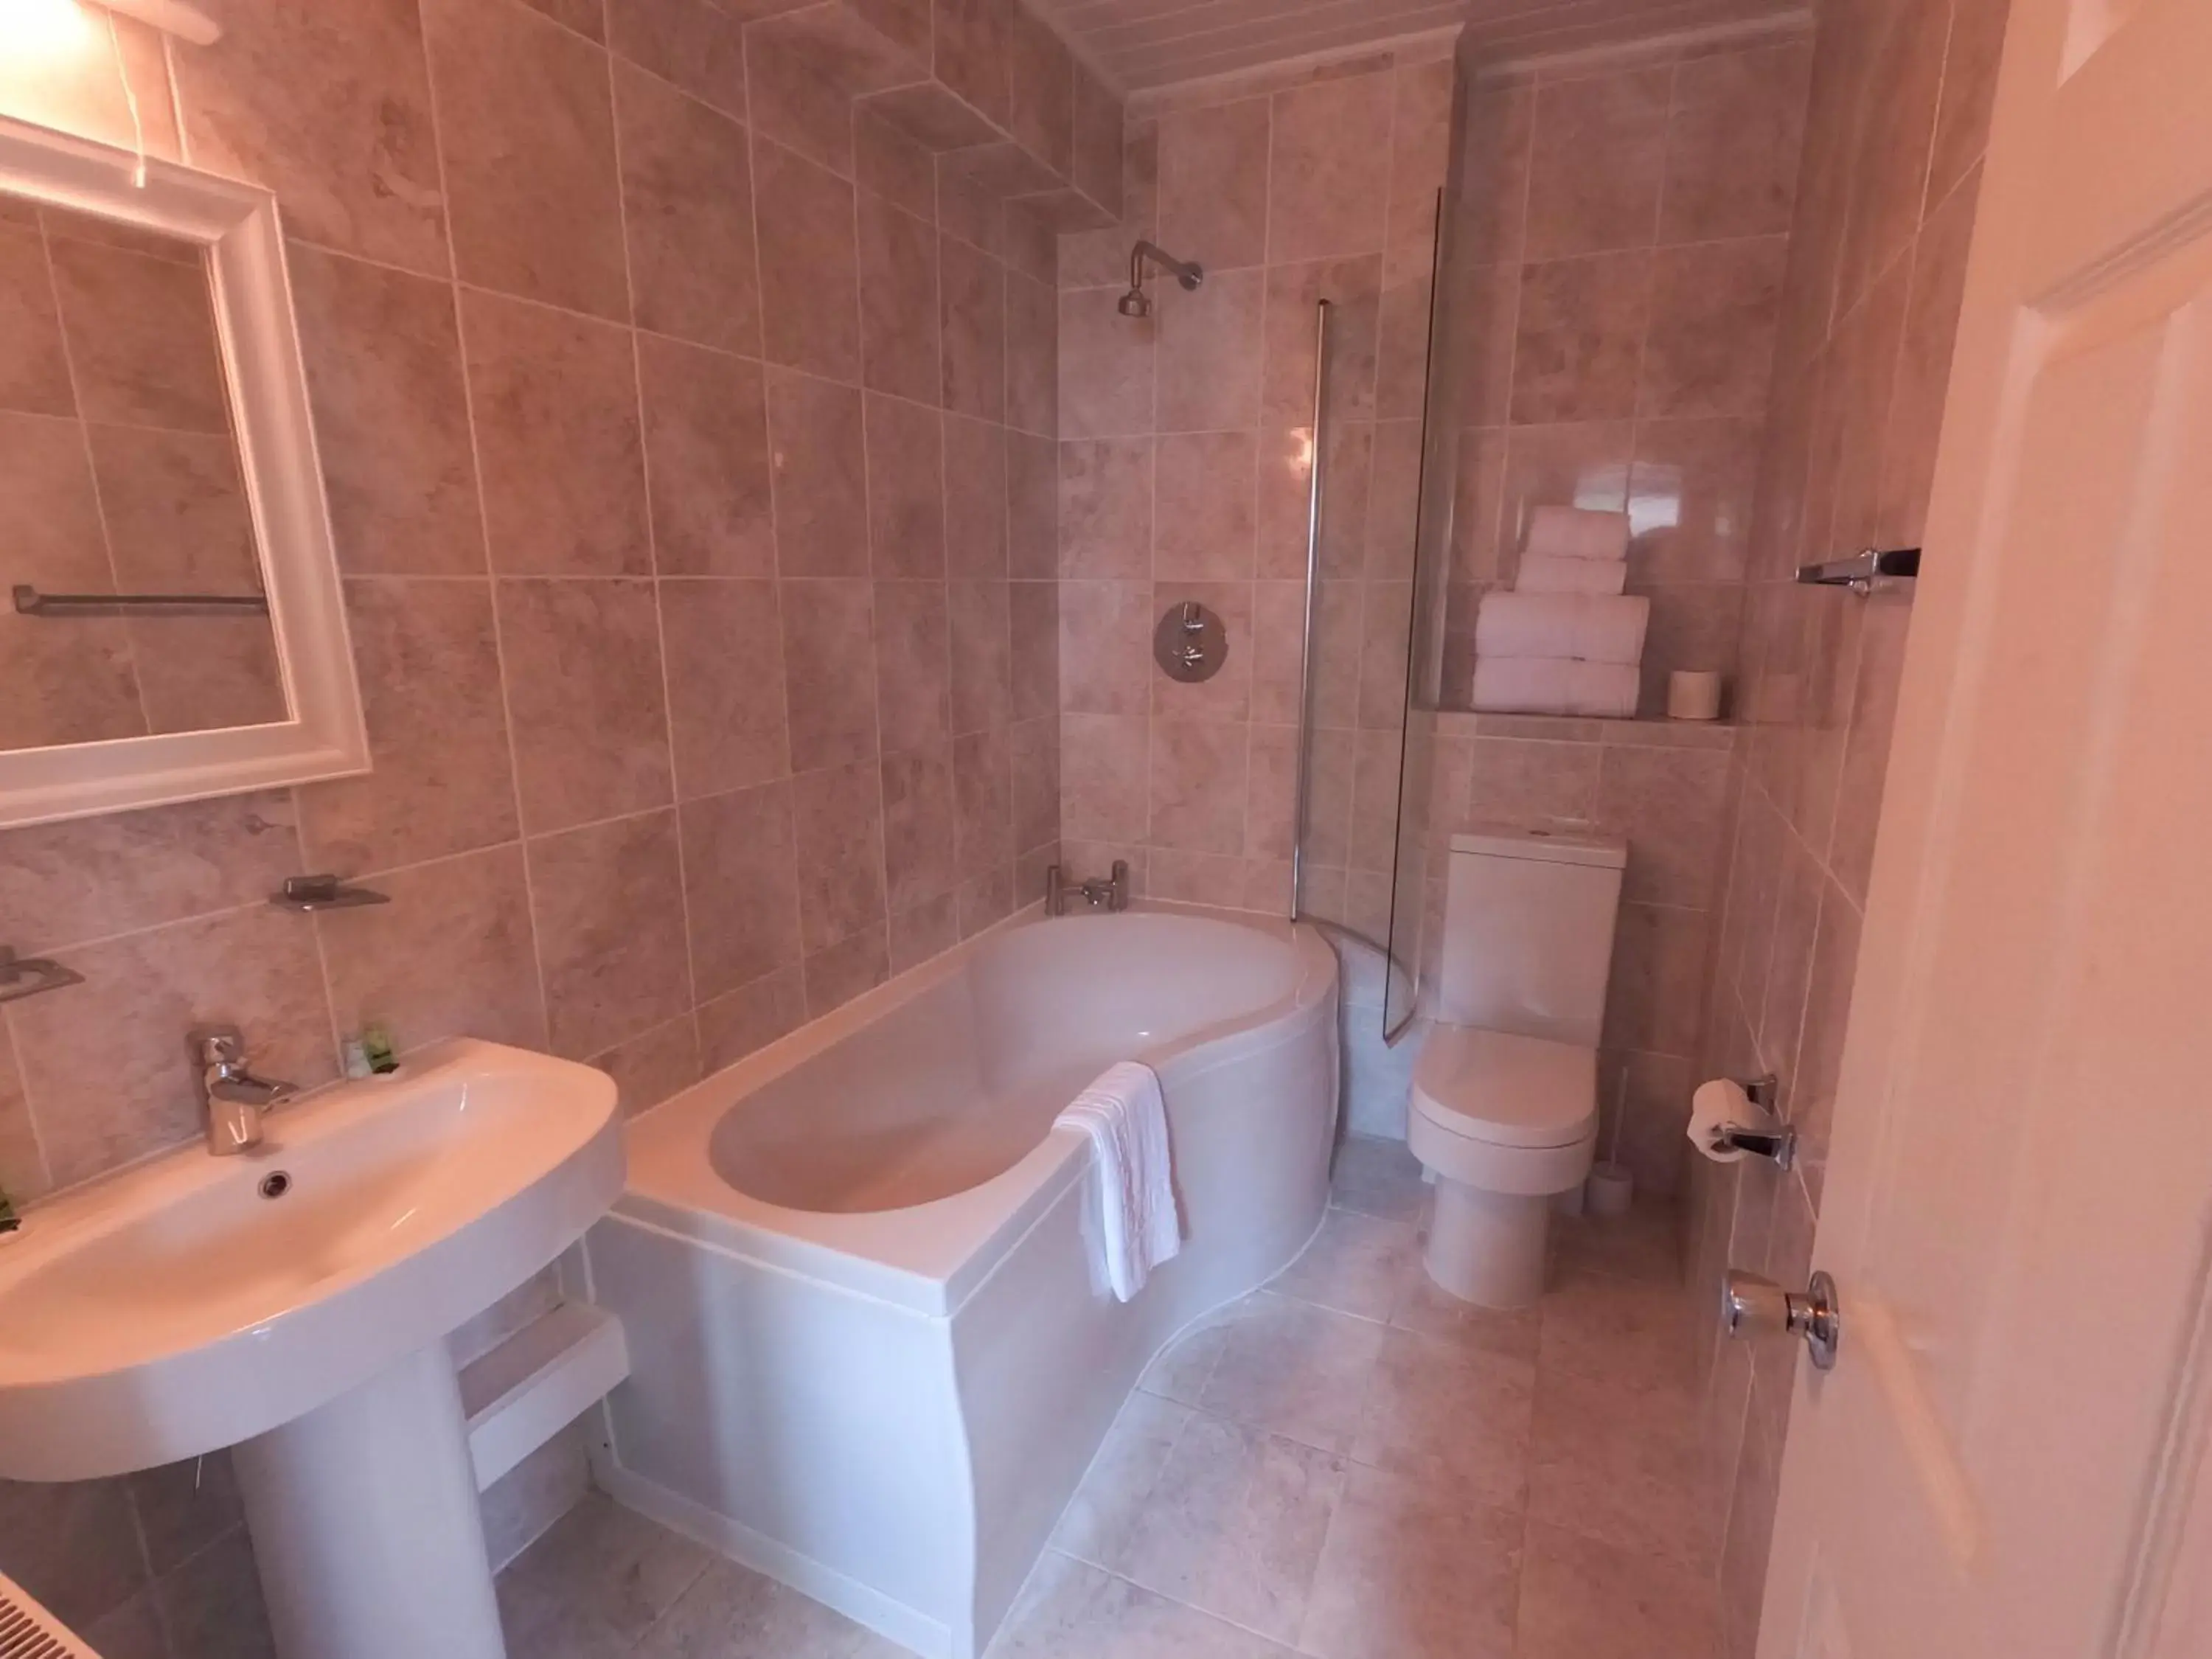 Bathroom in Hamlet Hotels Maidstone